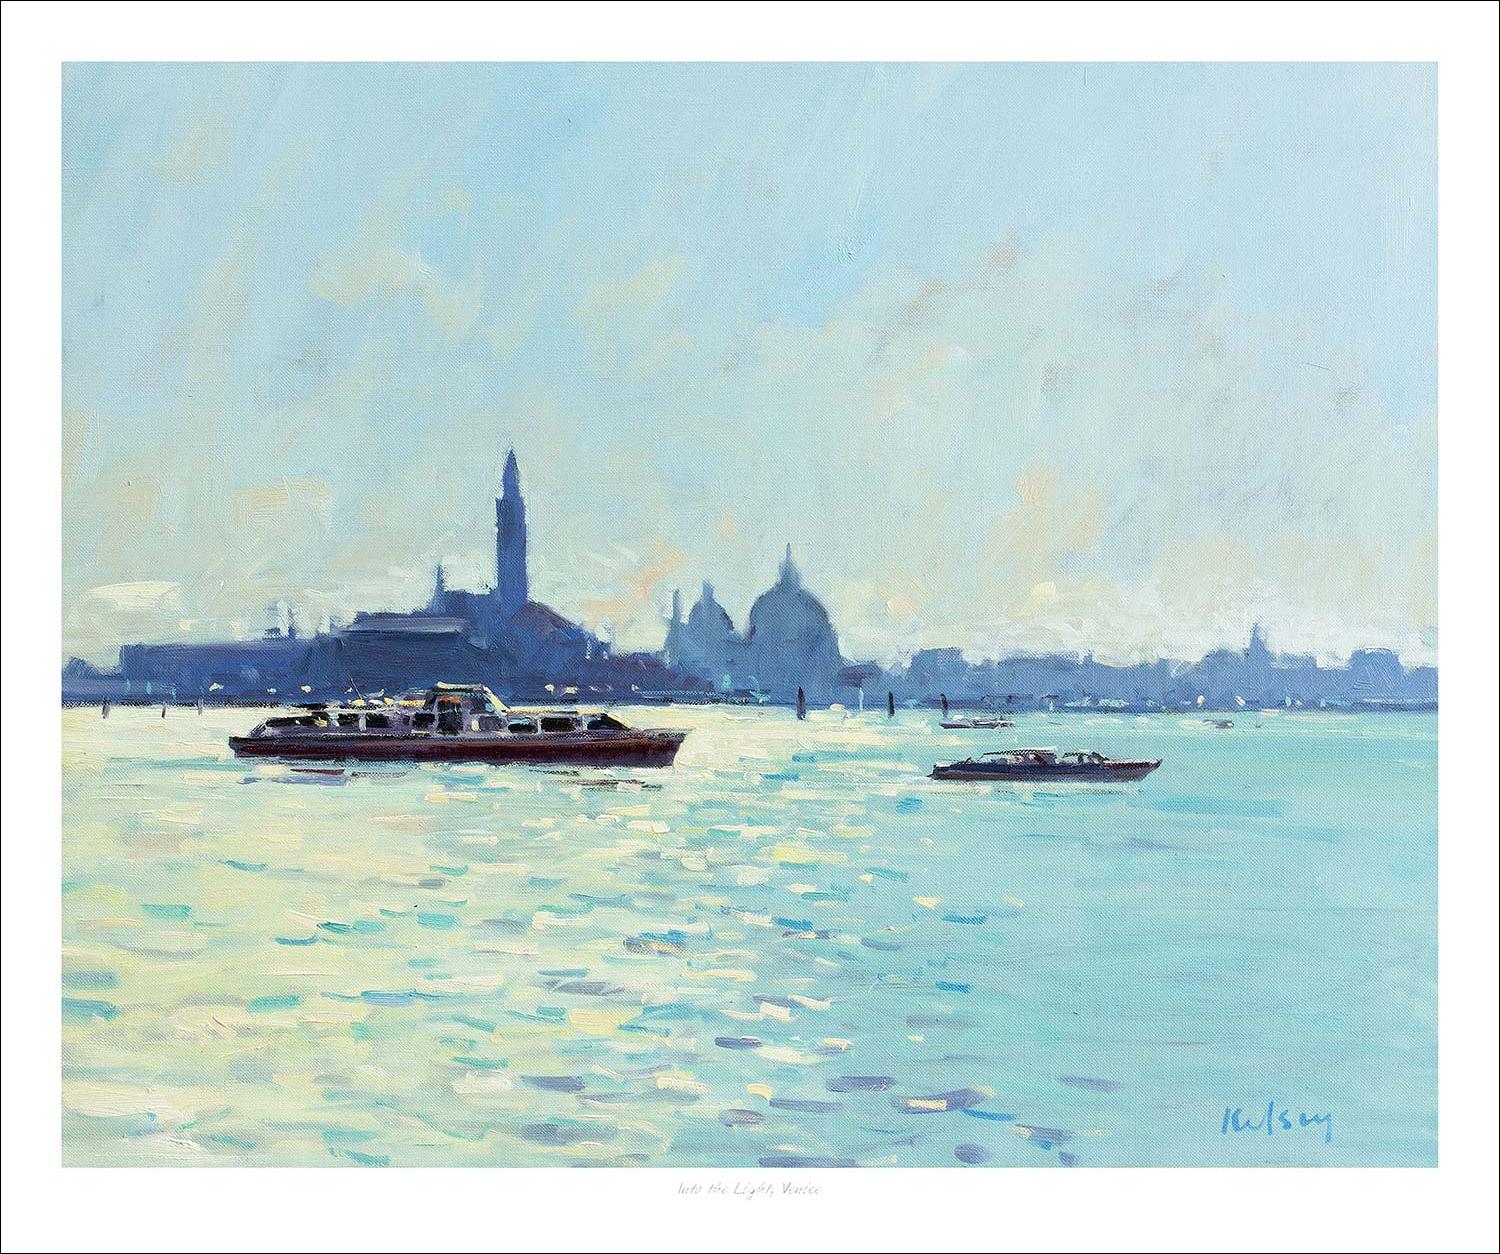 Into the Light, Venice Art Print from an original painting by artist Robert Kelsey